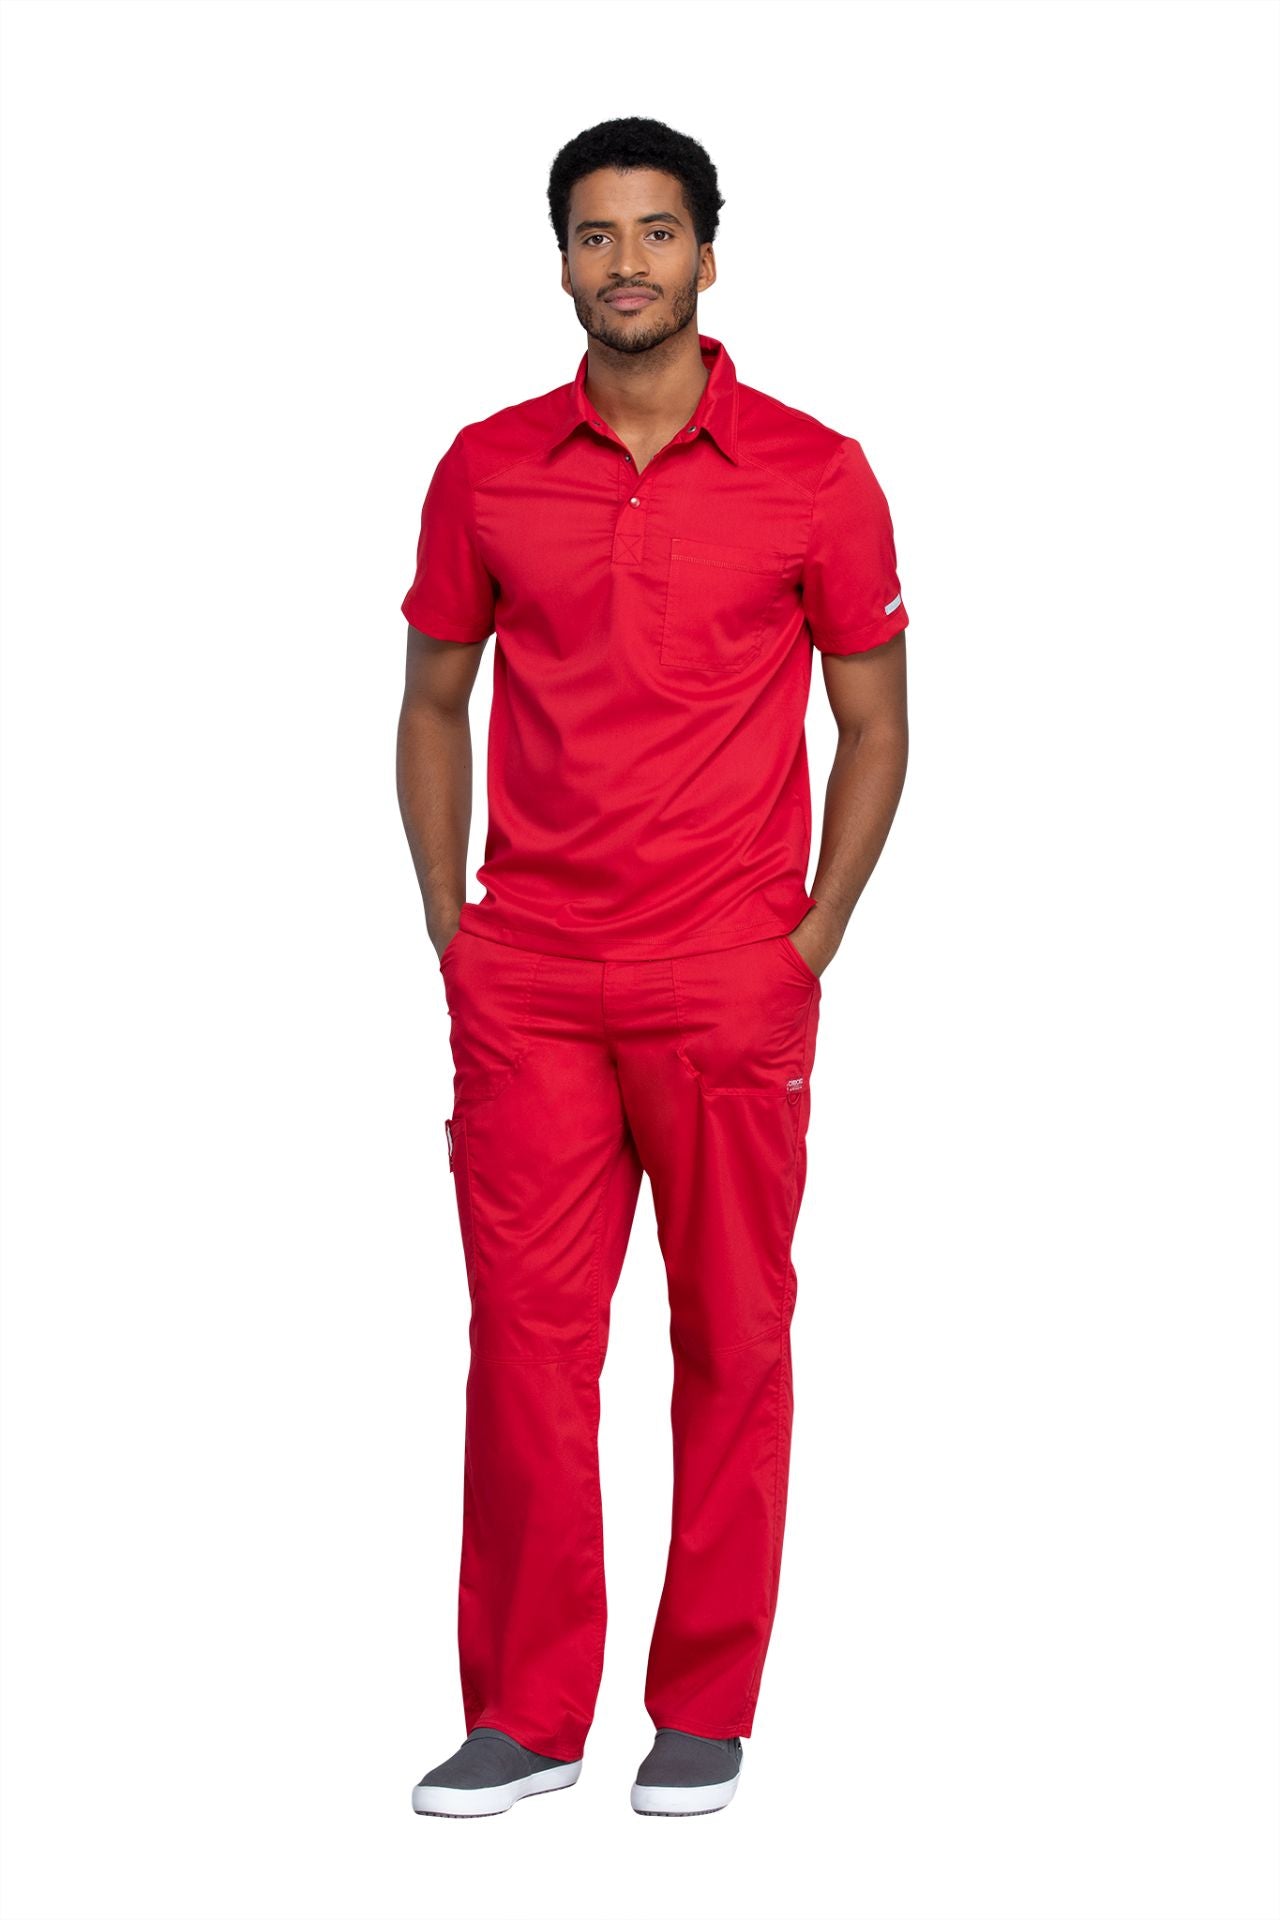 Red - Cherokee Workwear Revolution Men's Polo Shirt